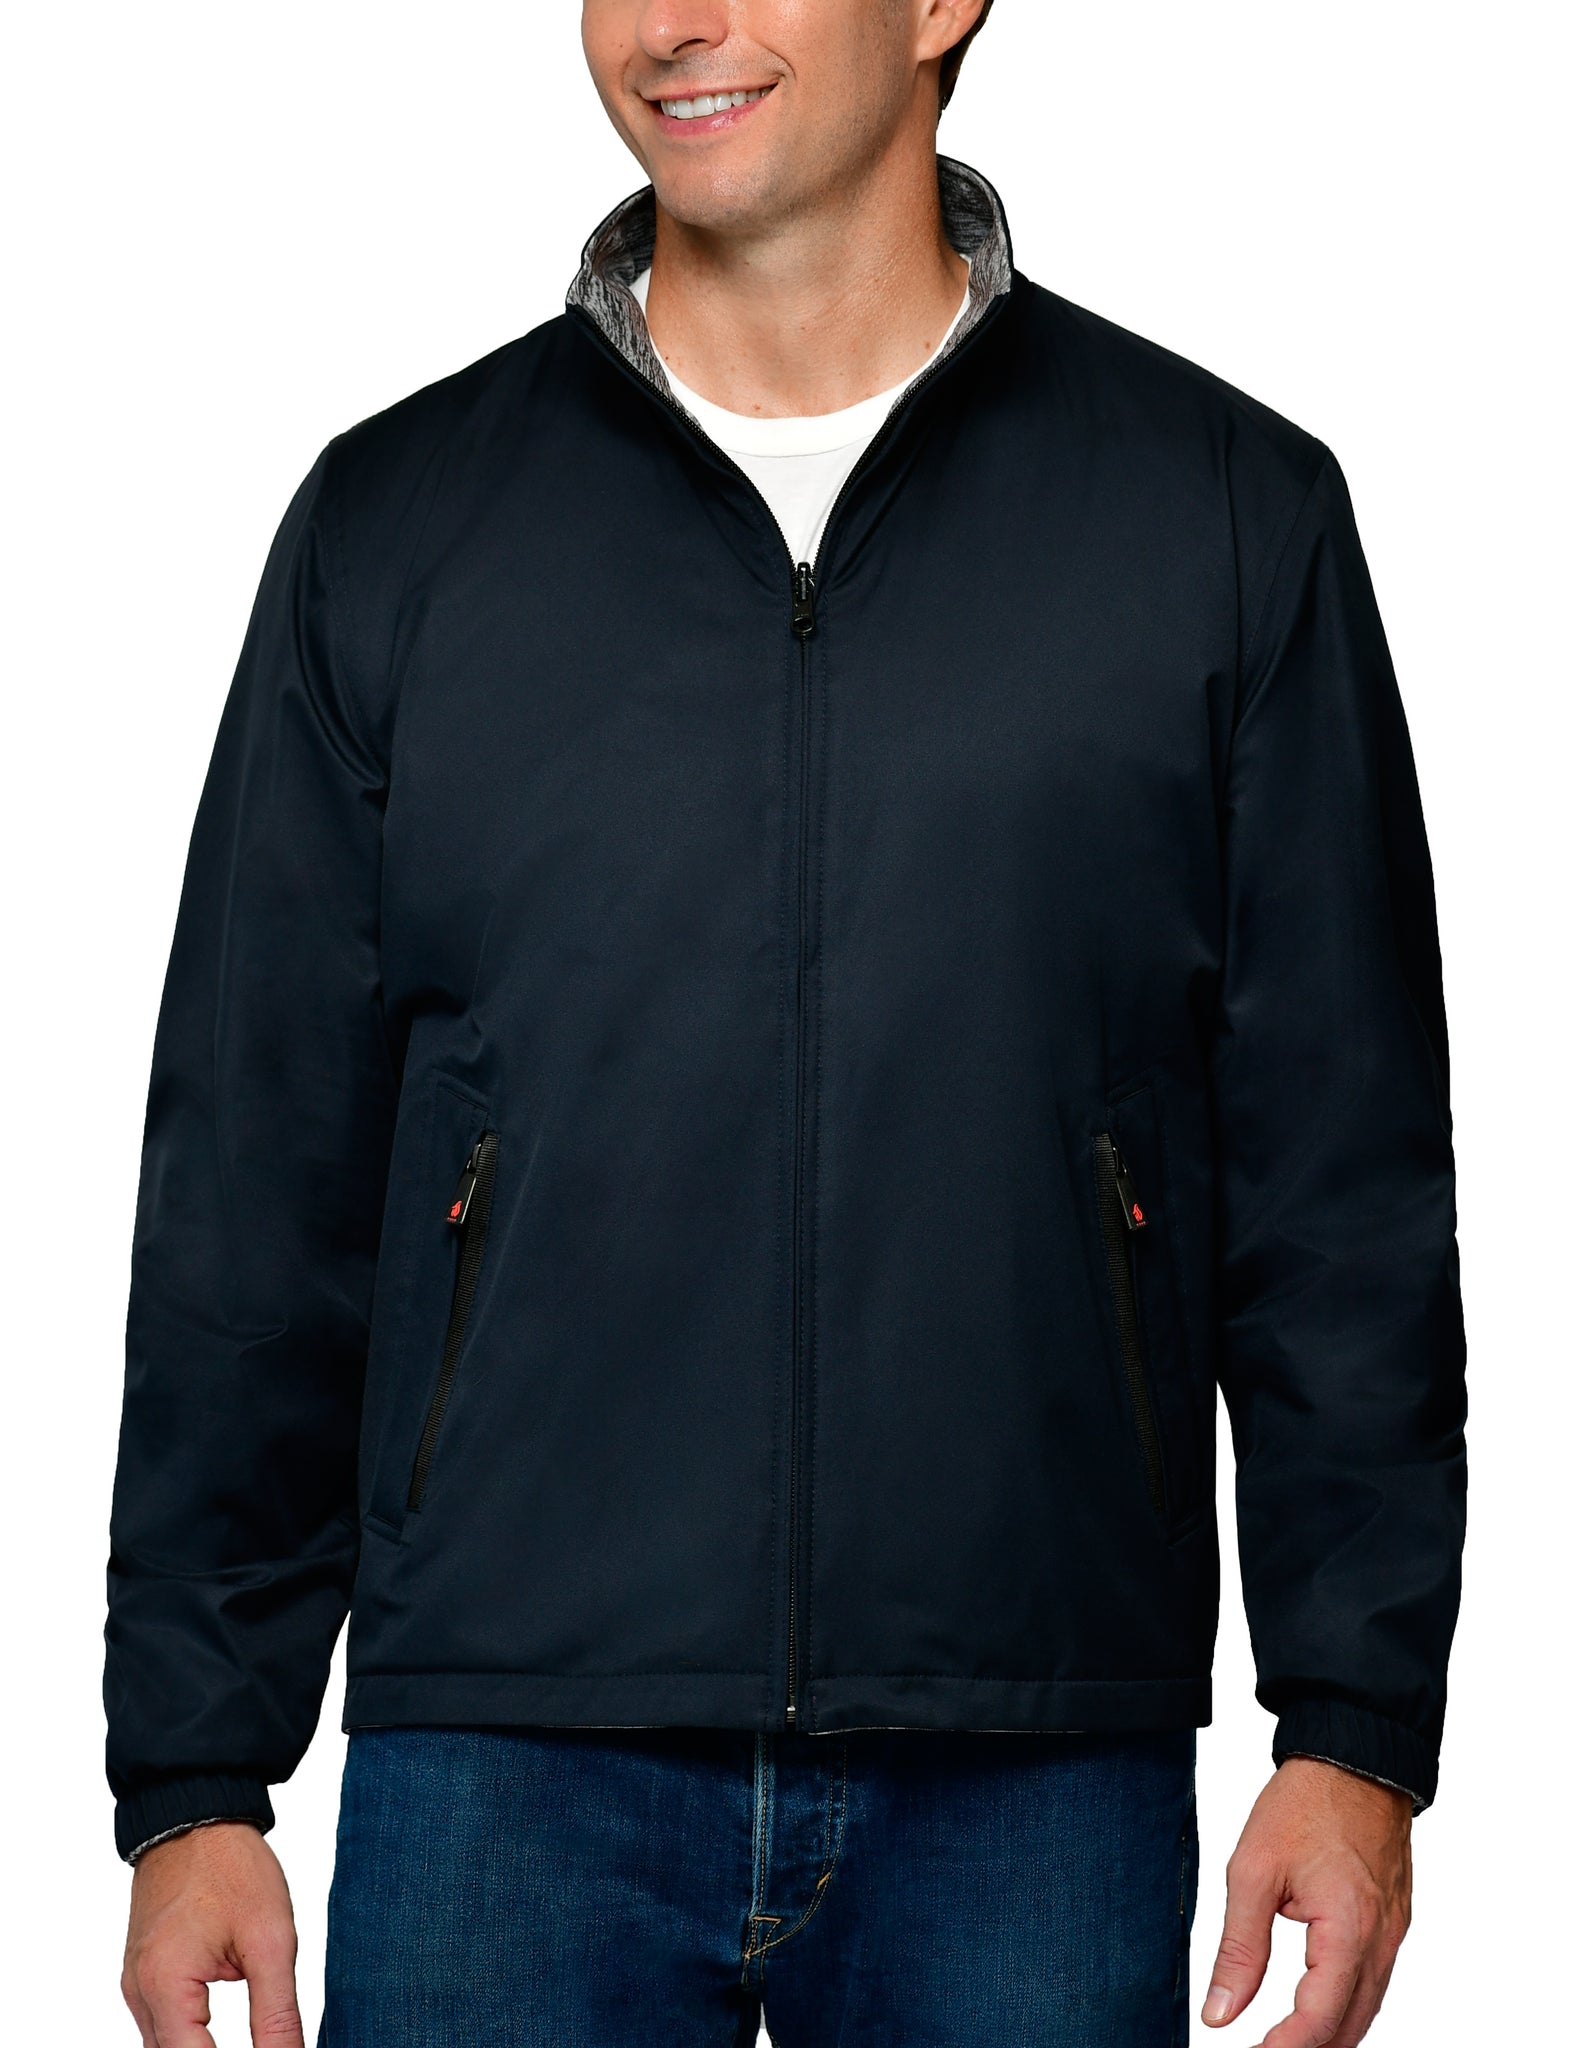 Thermostyles Men's Reversible Windbreaker Jacket